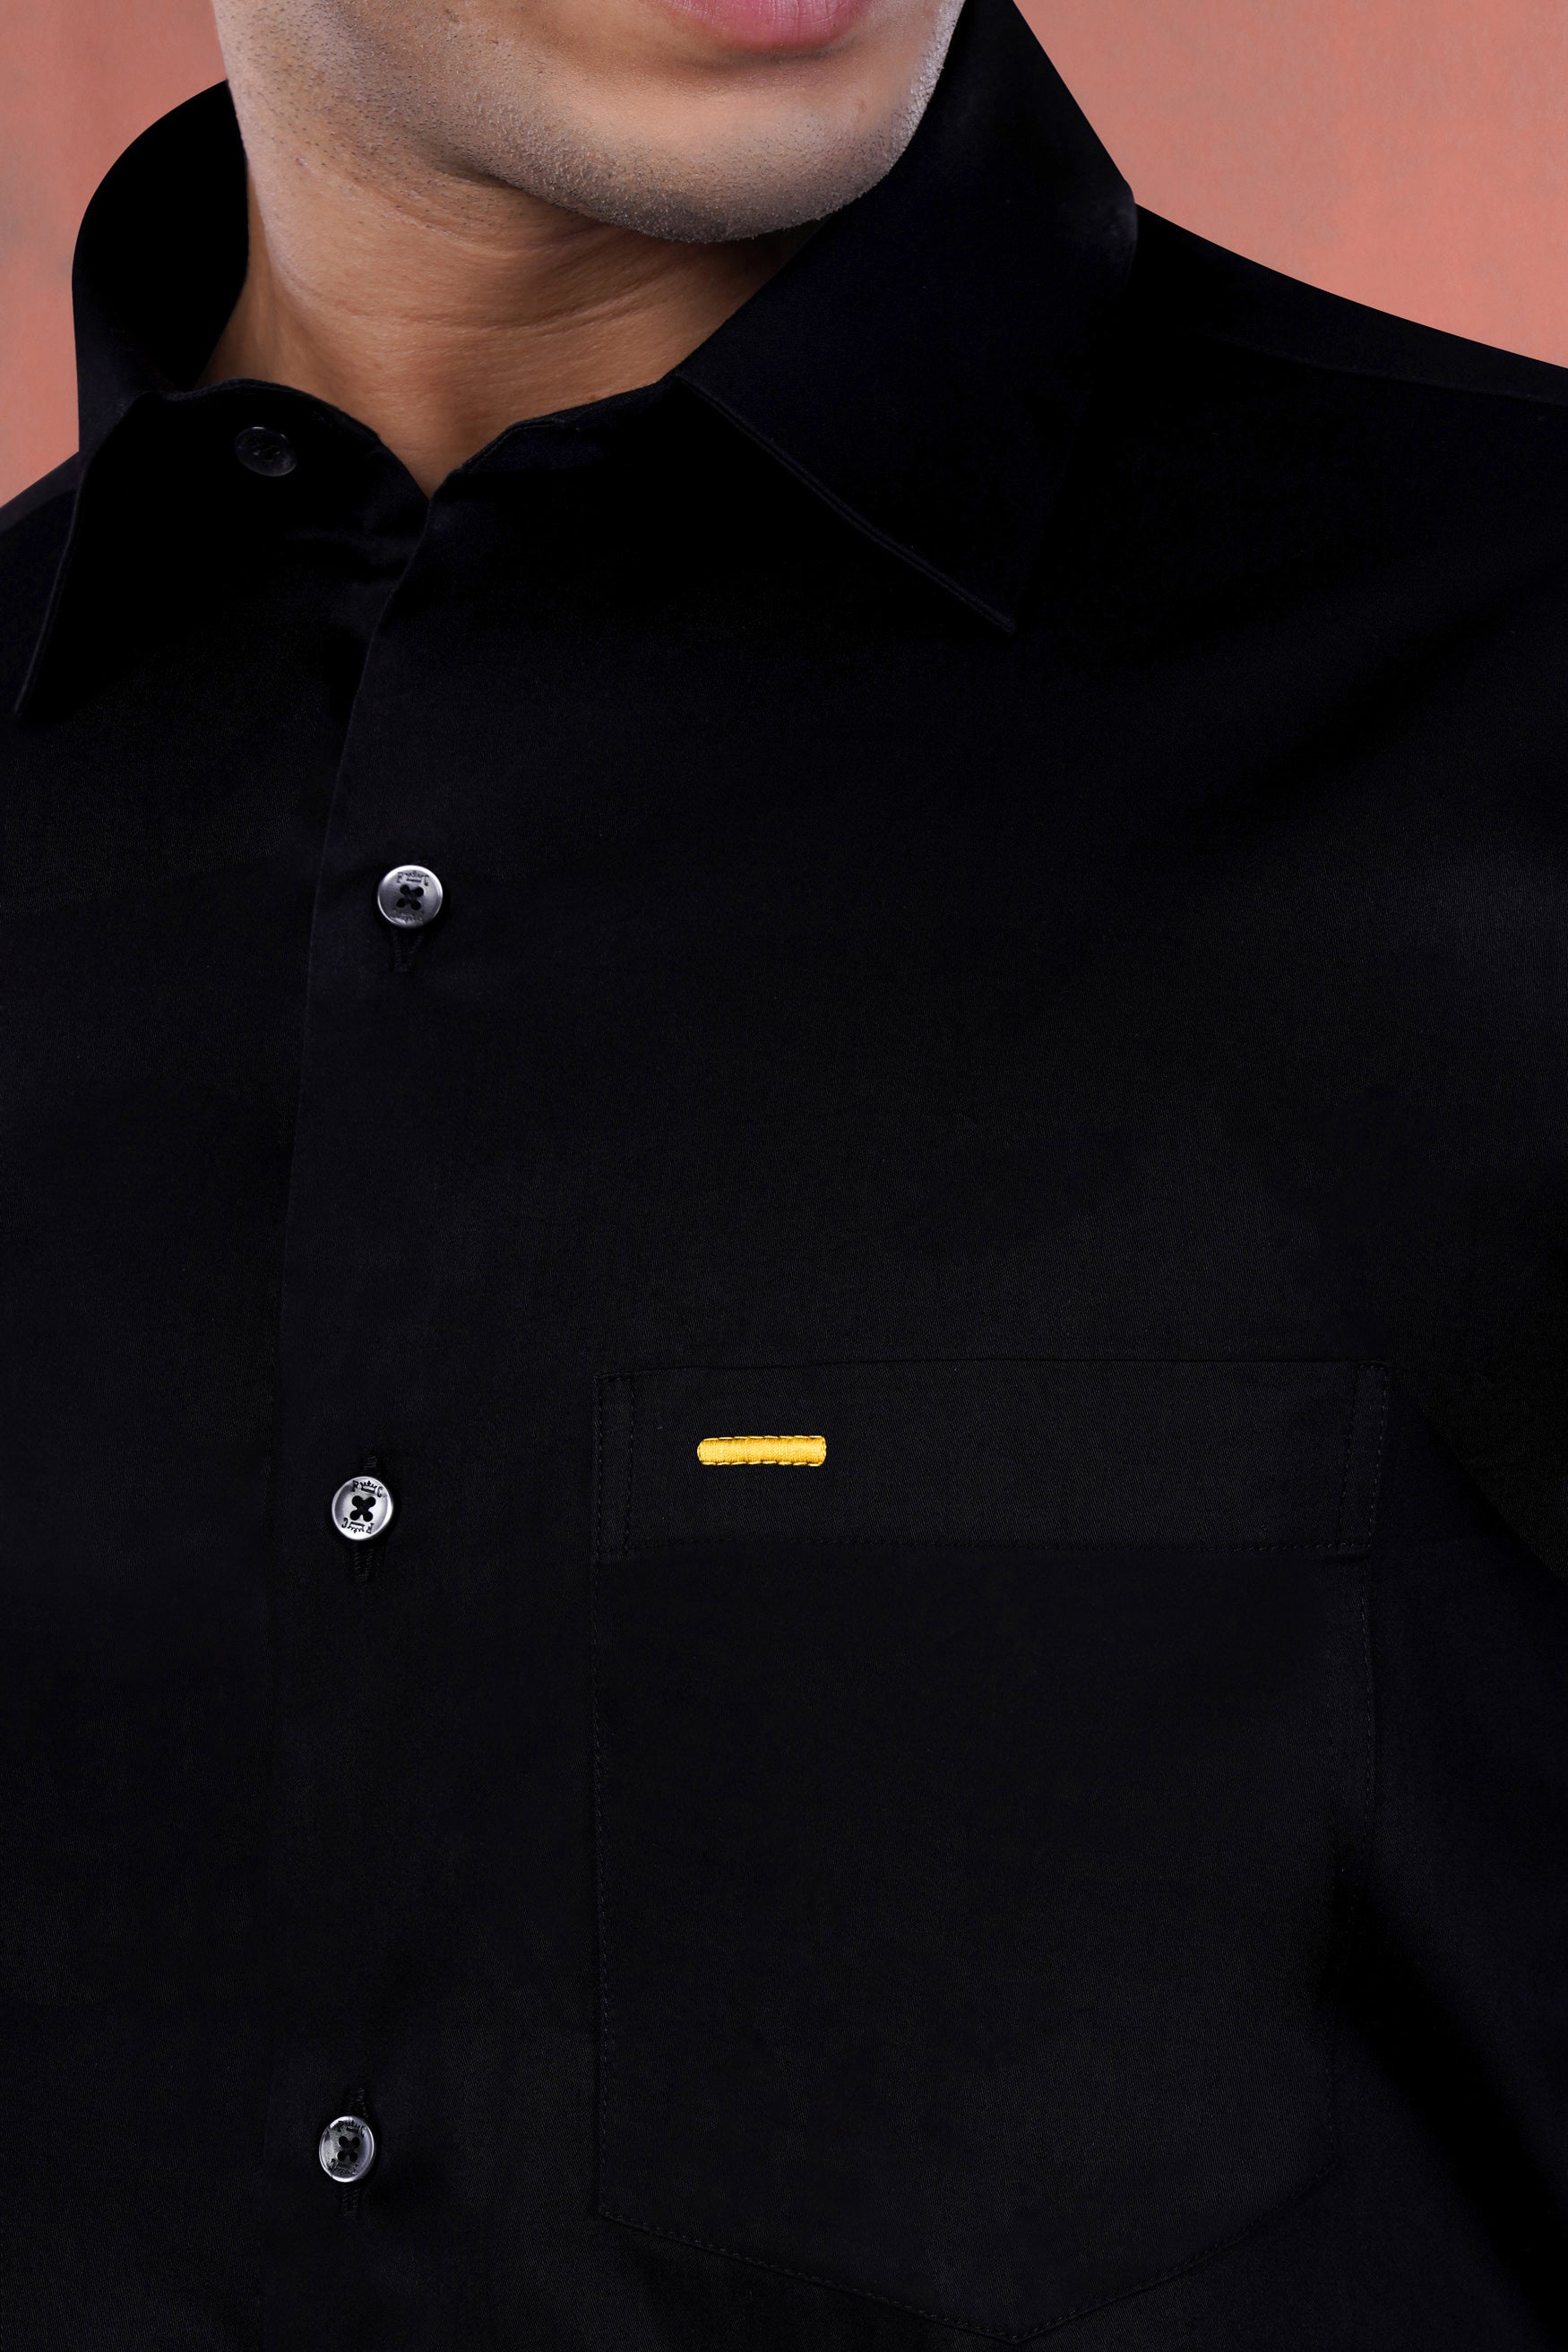 Jade Black Line Element Embroidered Subtle Sheen Super Soft Premium Cotton Designer Shirt